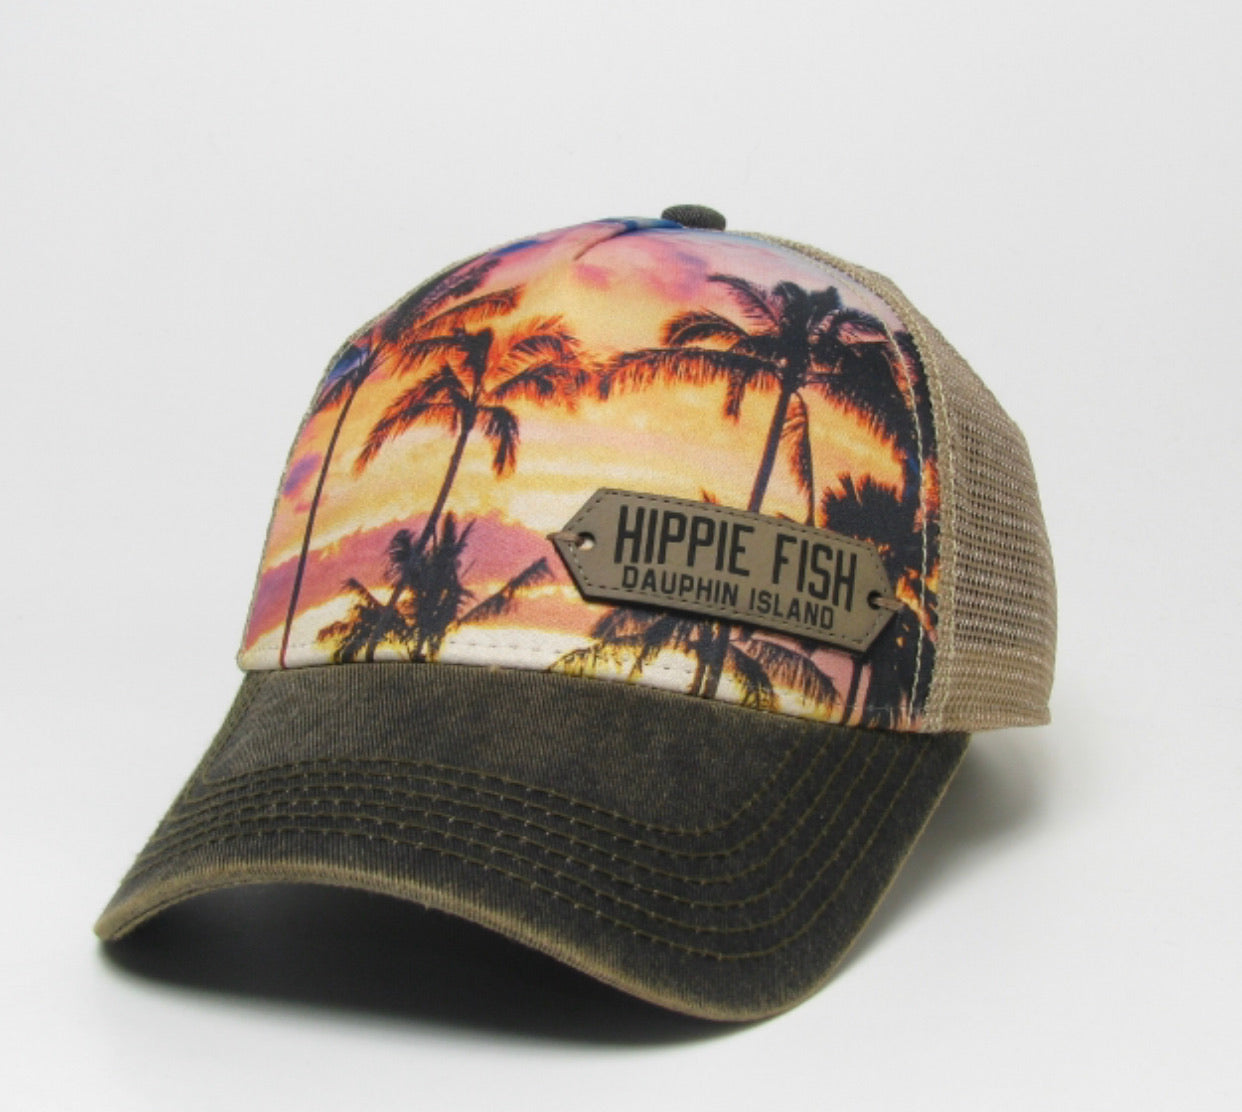 PALM TREE HATS – The Hippie Fish